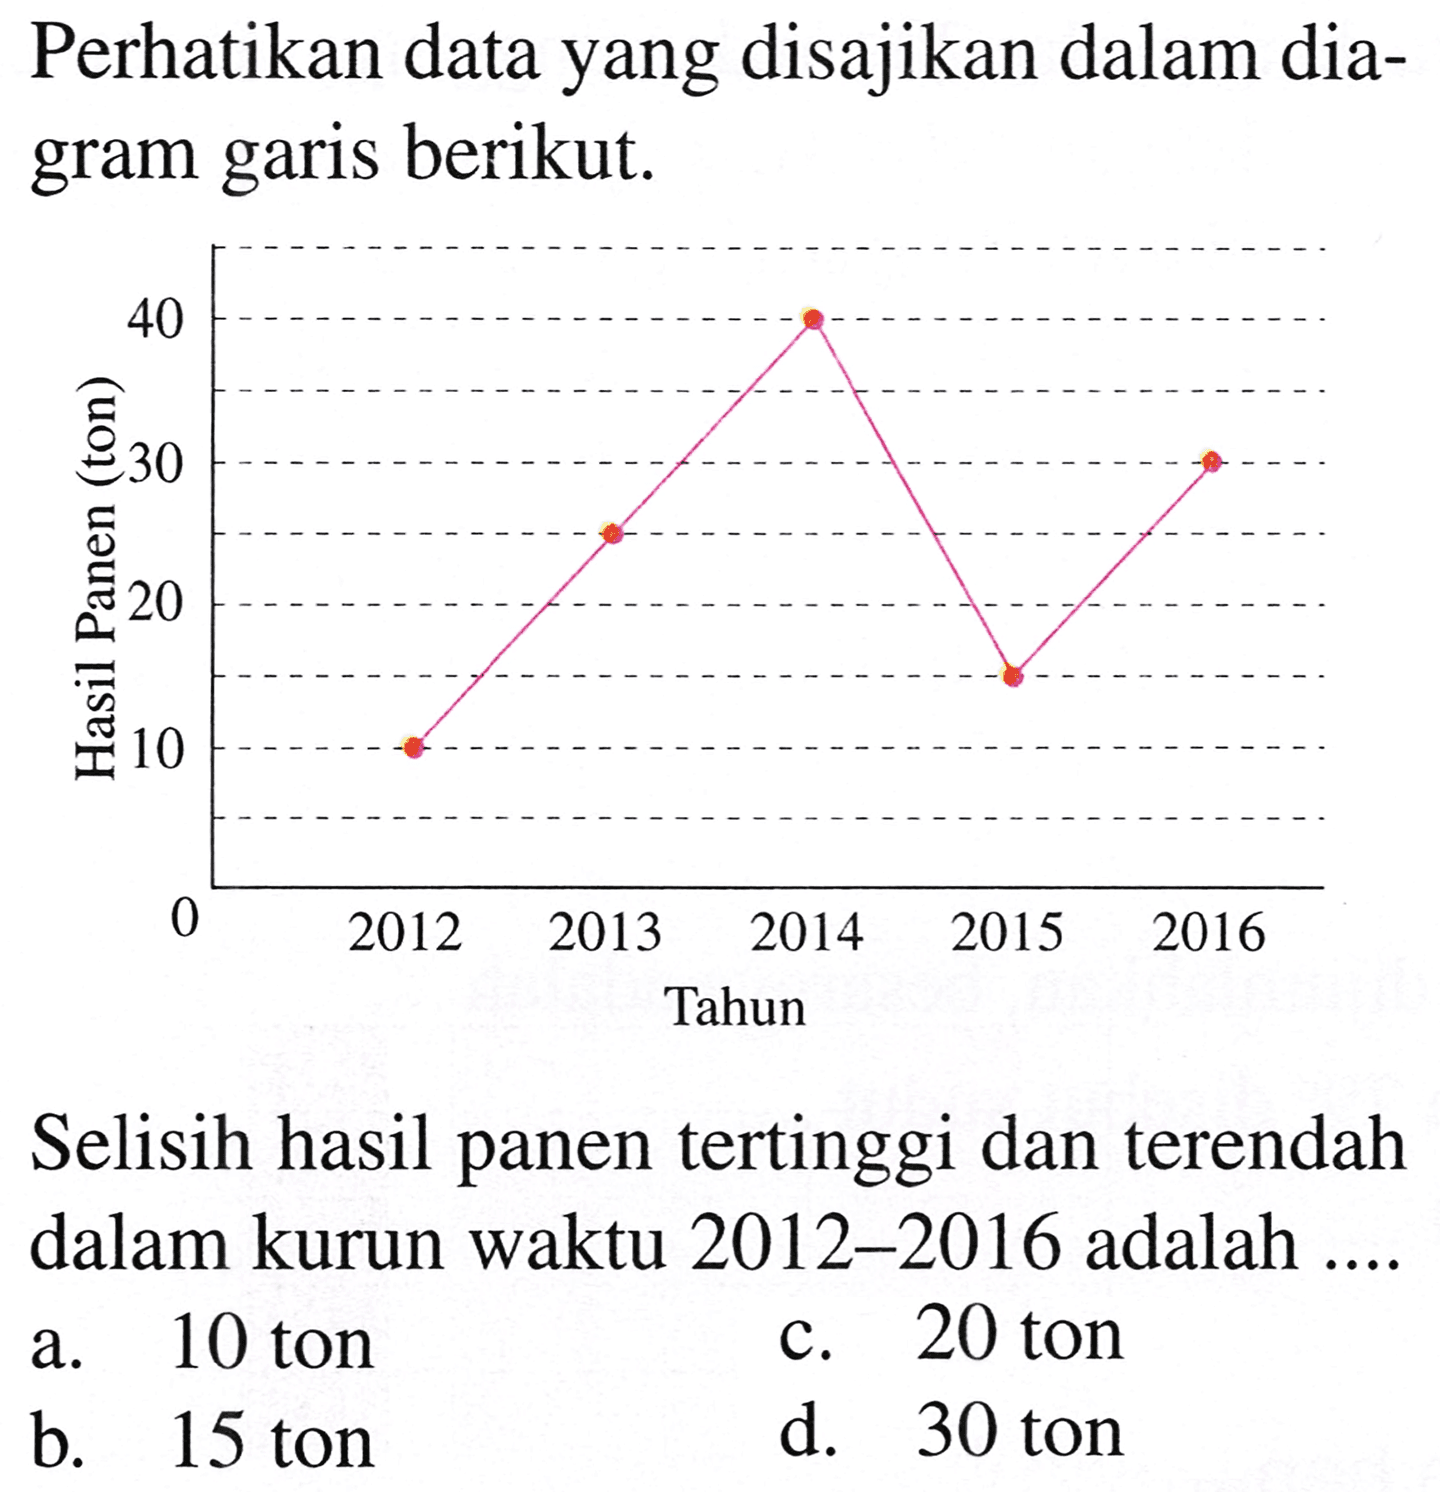 Perhatikan data yang disajikan dalam diagram garis berikut.

Selisih hasil panen tertinggi dan terendah dalam kurun waktu 2012-2016 adalah ....
a. 10 ton
c. 20 ton
b. 15 ton
d. 30 ton